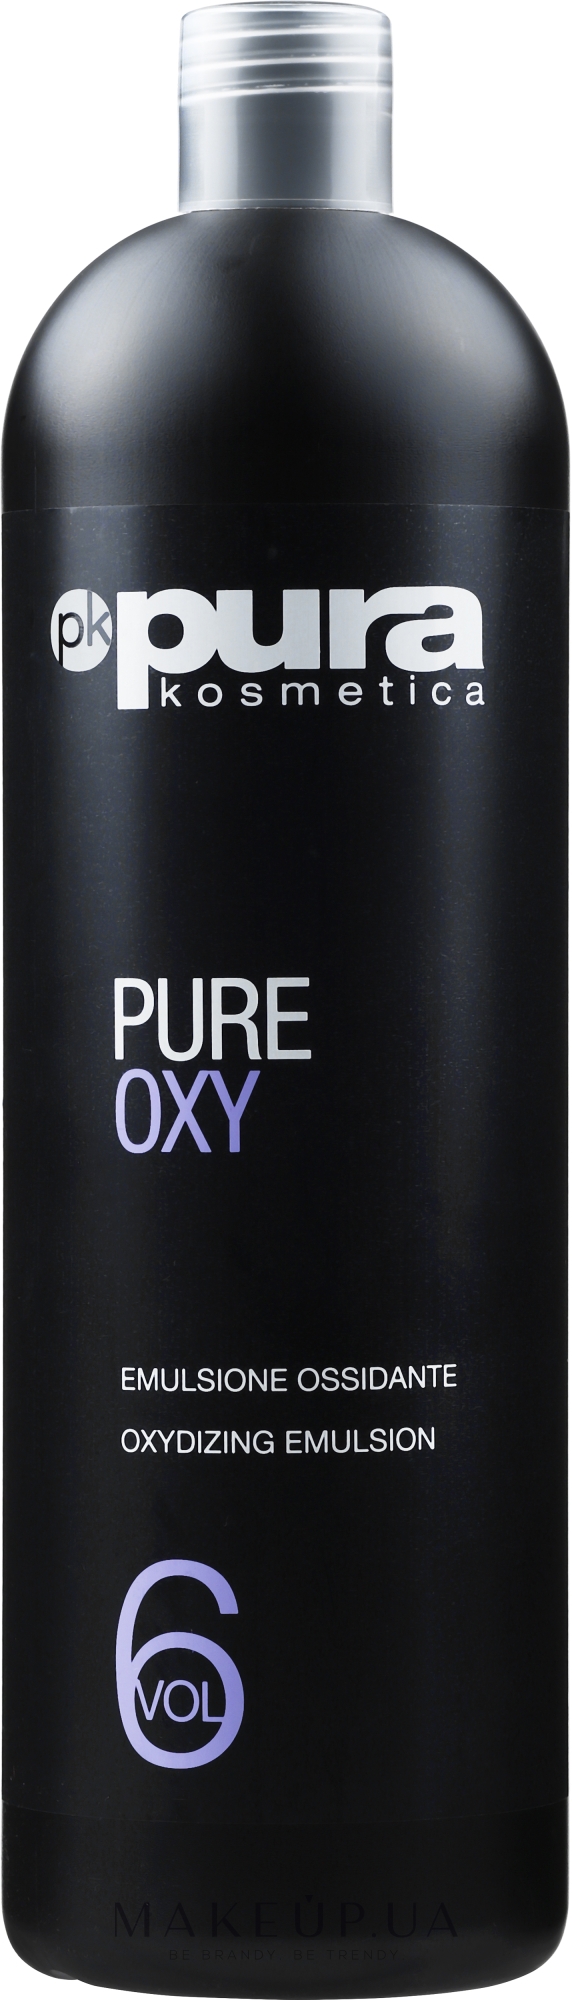 Окислювач для фарби 1,8% - Pura Kosmetica Pure Oxy 6 Vol — фото 1000ml